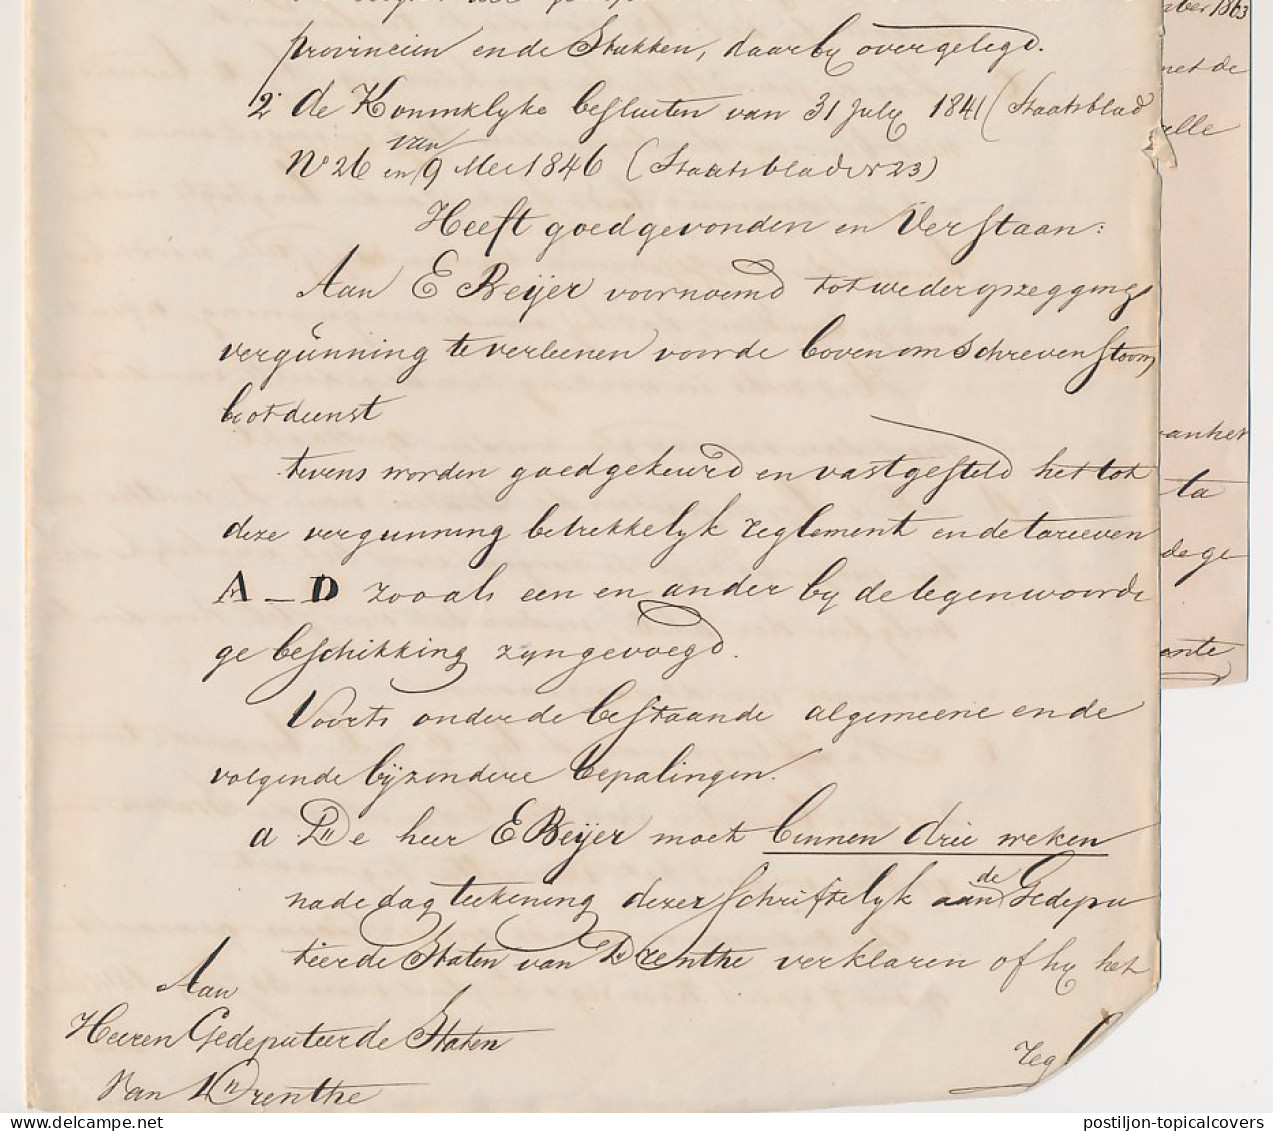 Reglement Stoombootdienst Zwolle - Assen 1863 - Cartas & Documentos